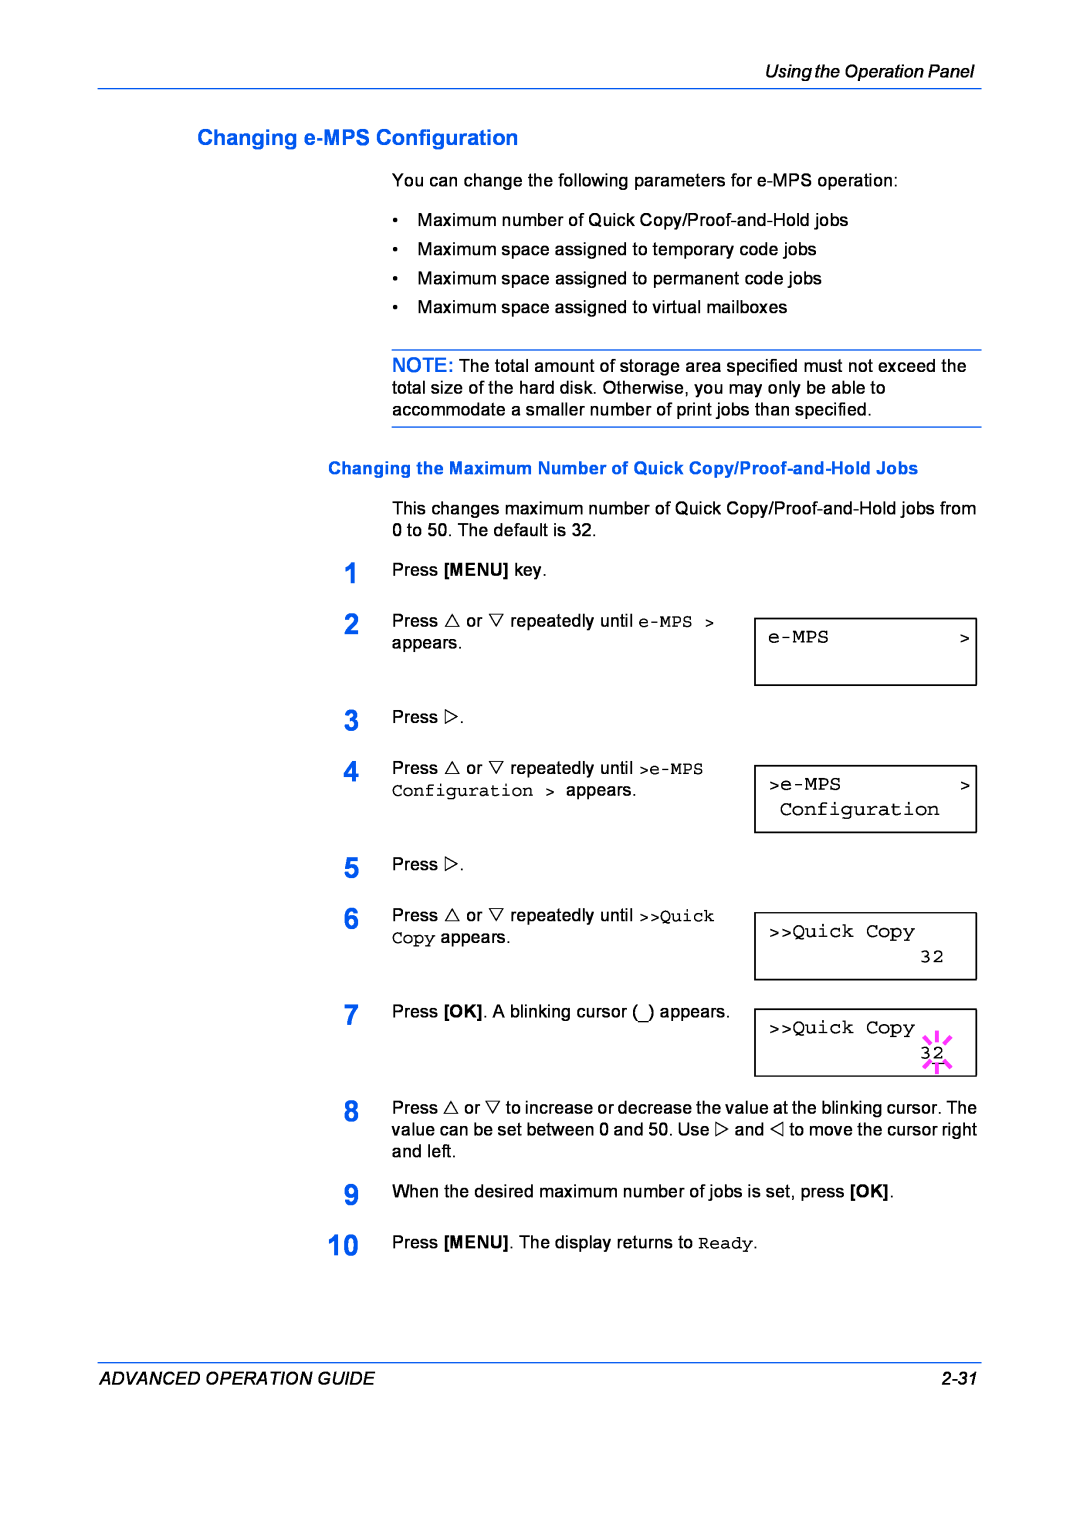 Kyocera 9530DN manual Changing e-MPS Configuration, e-MPS Configuration Quick Copy 